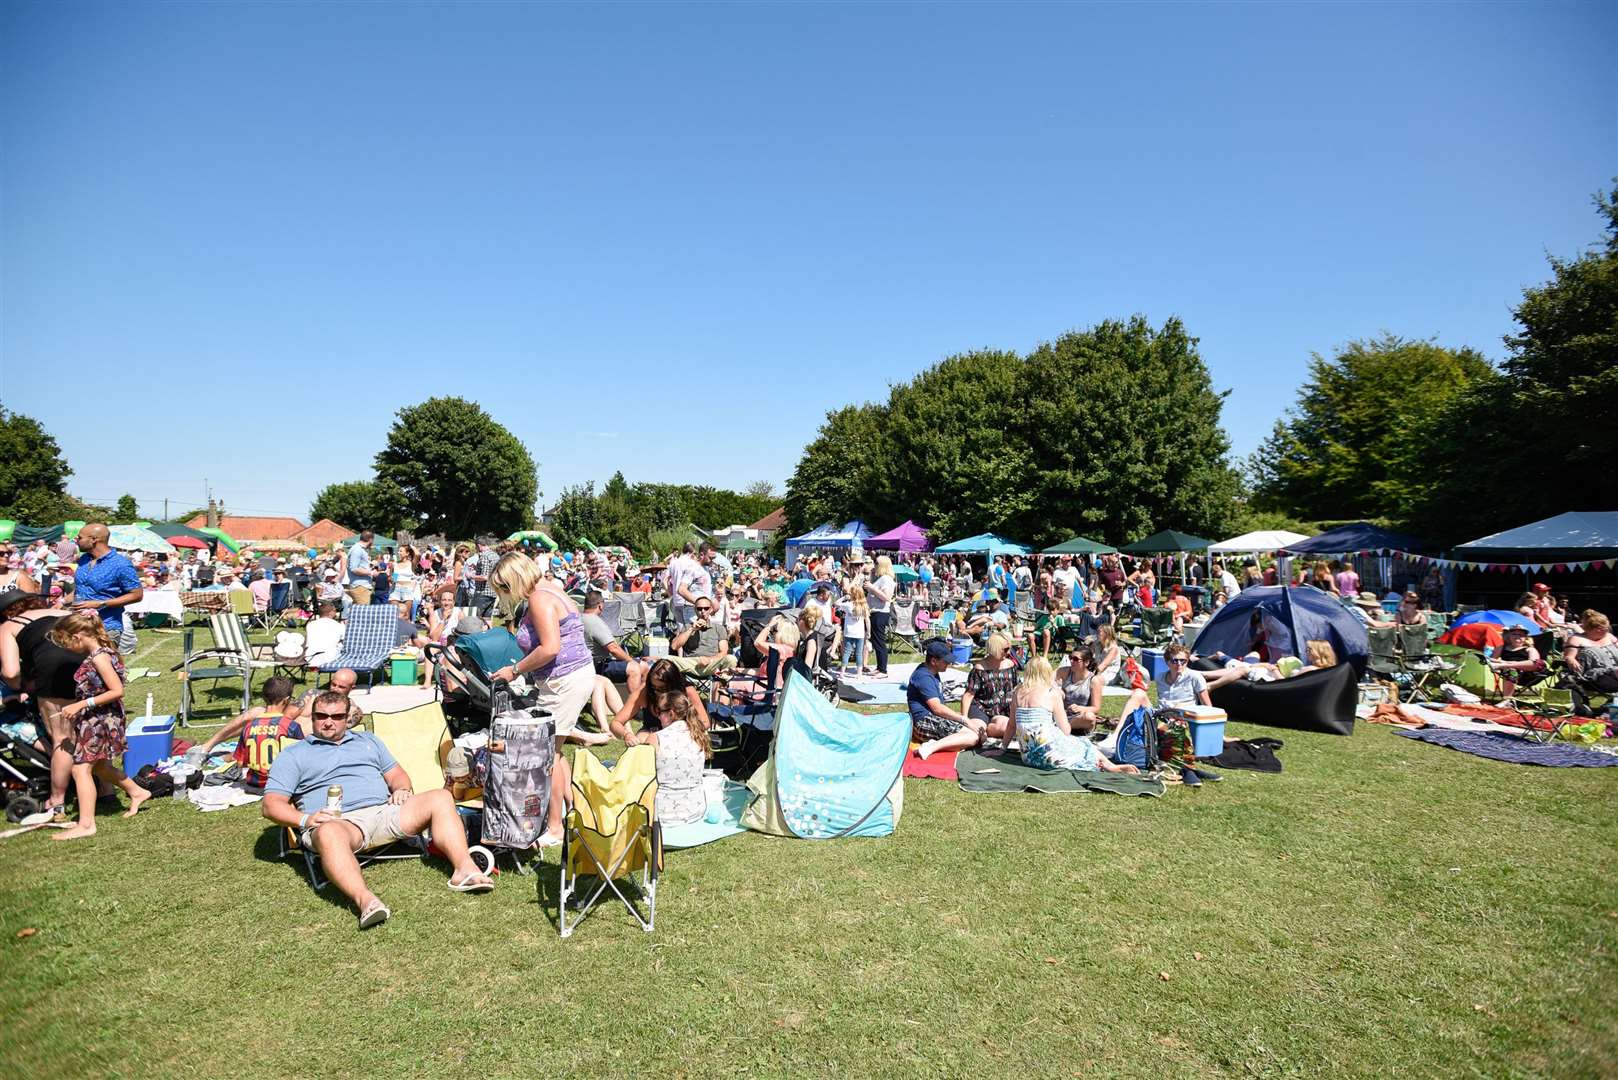 Festival revellers sun bathed at a past Kingsdown Rocks festival at Kingsdown & Ringwould Primary School